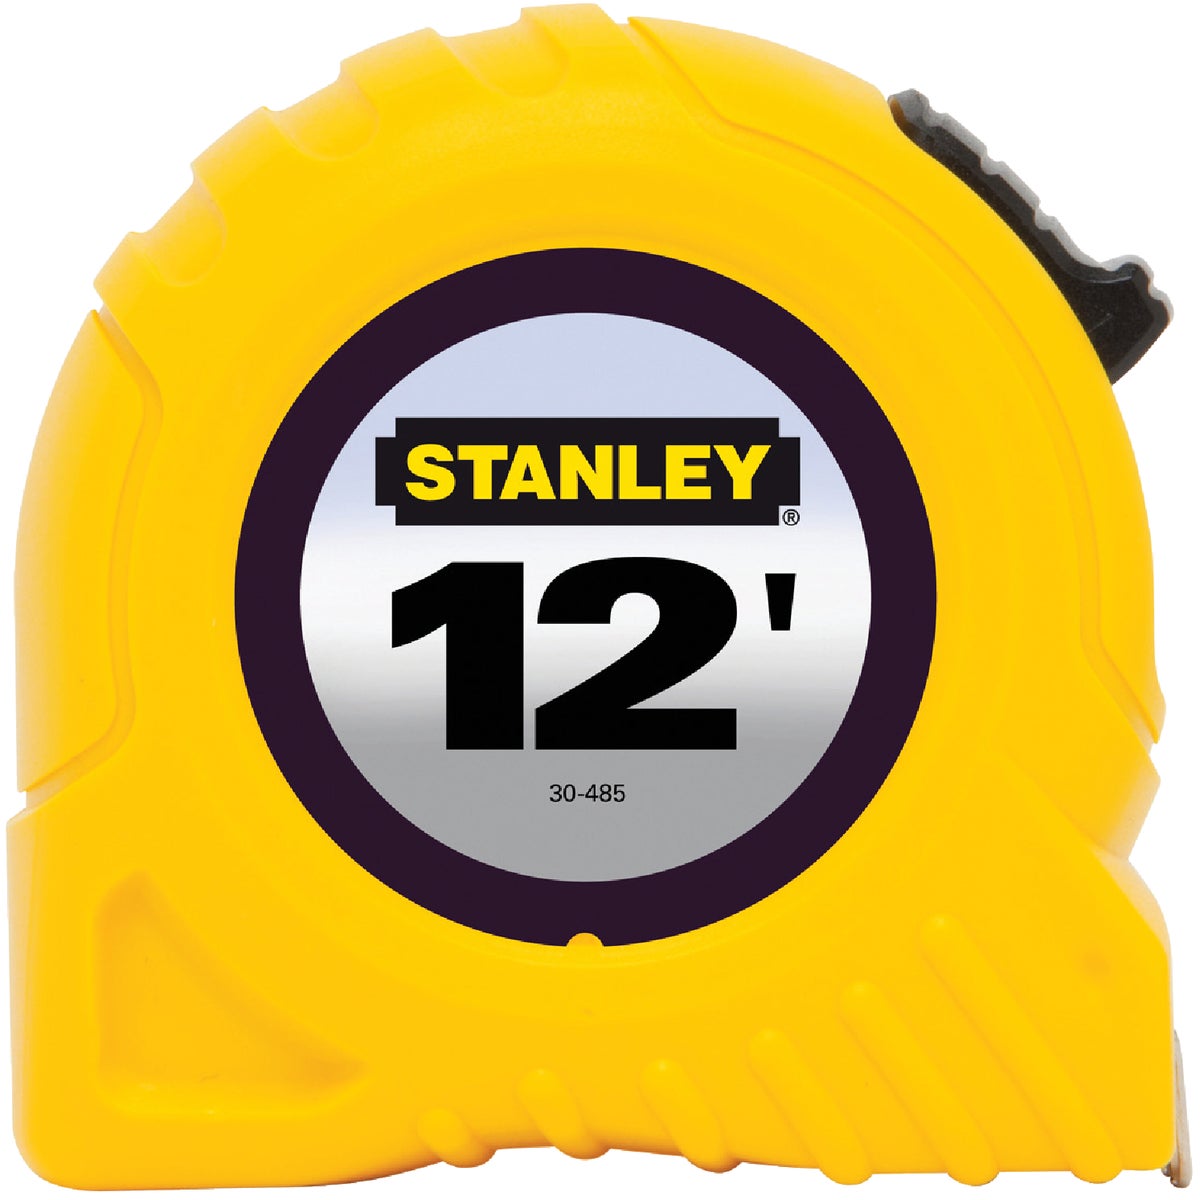 Stanley 12 Ft. Tape Measure